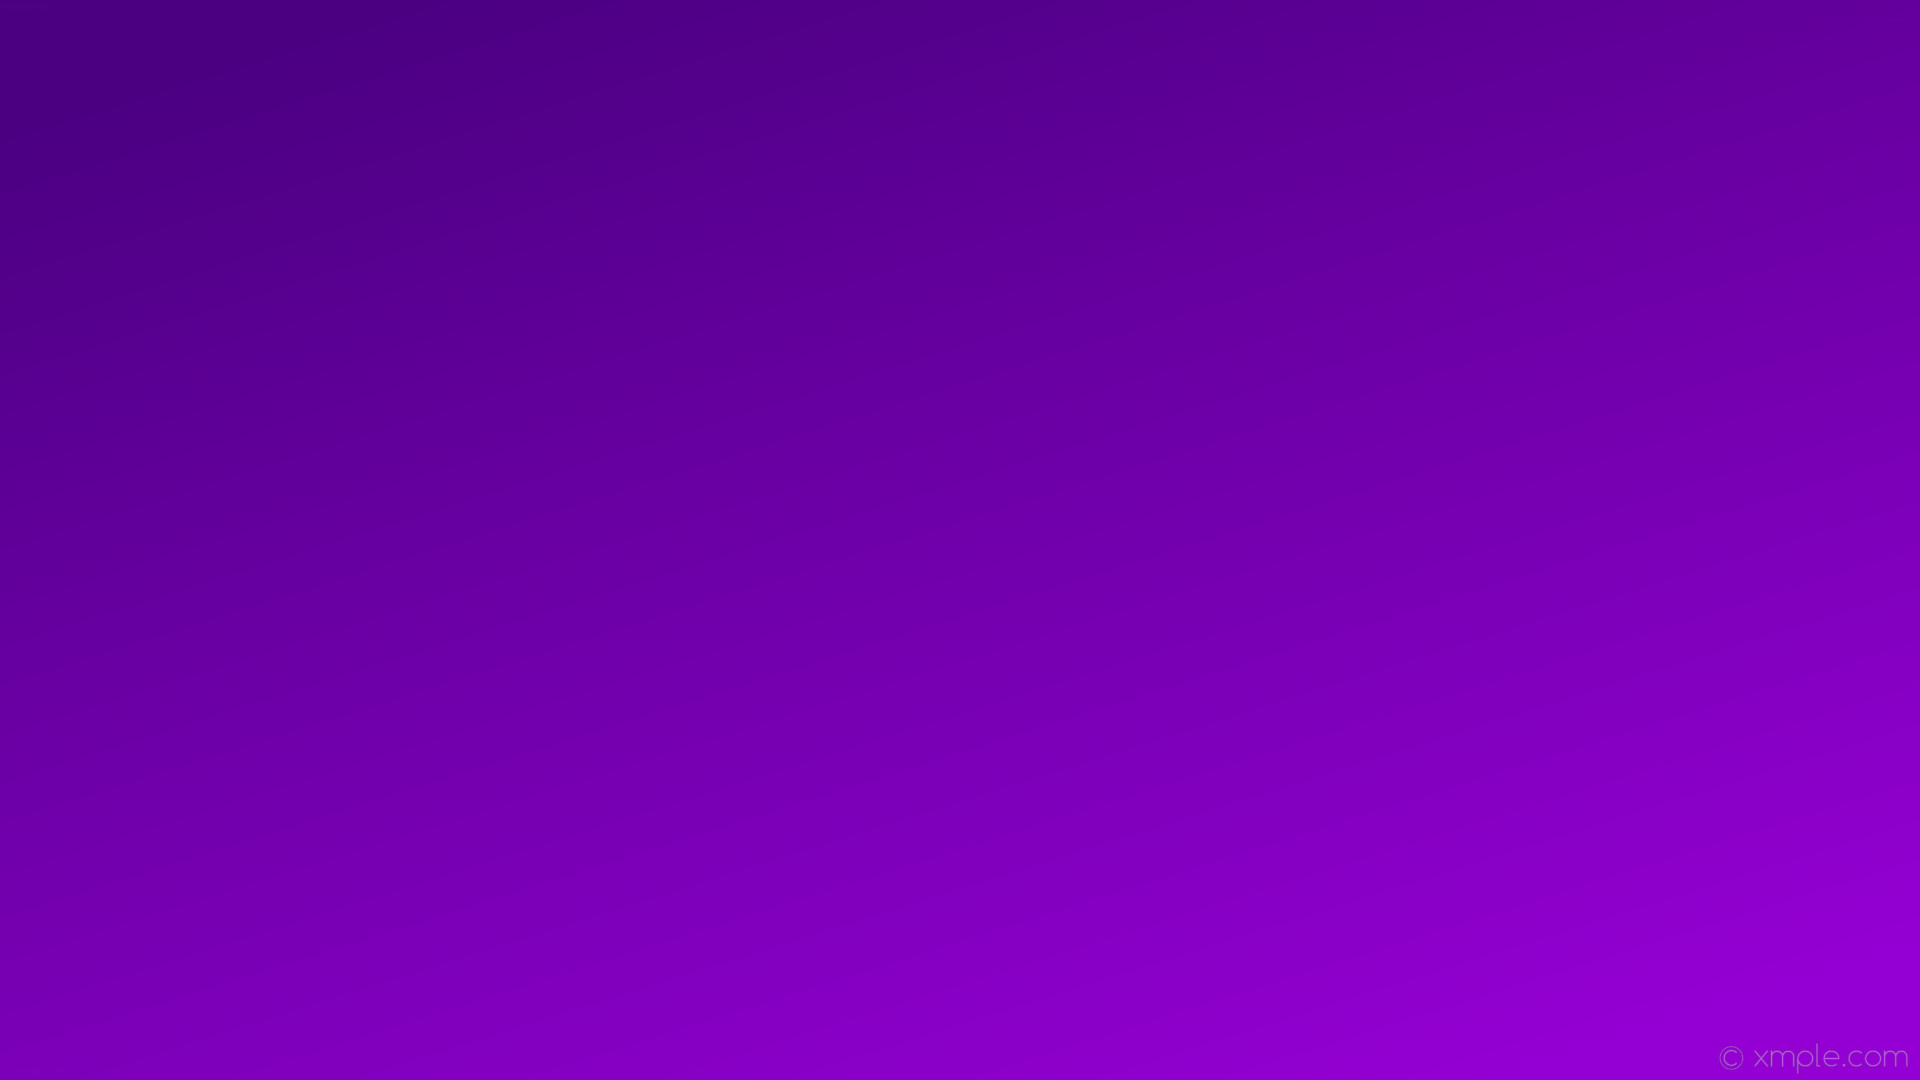 1920x1080 wallpaper purple gradient linear dark violet indigo #9400d3 #4b0082 315Â°